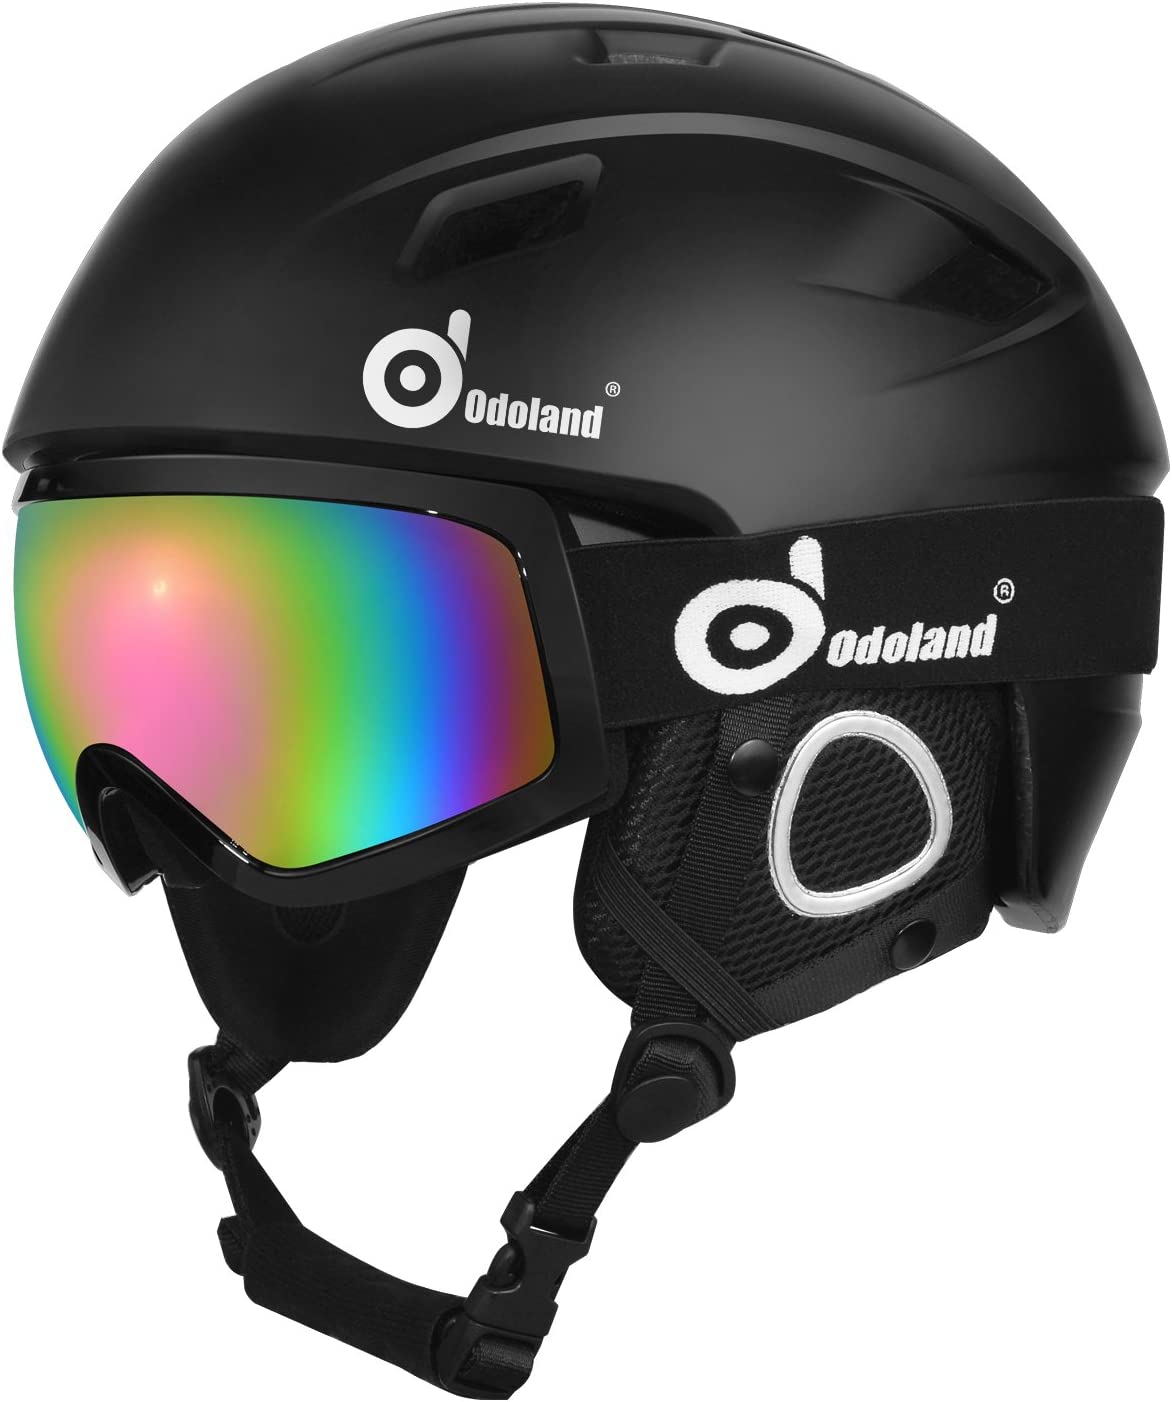 Odoland Snow Ski Helmet and Goggles Set, Sports Helmet and Protective Glasses - Shockproof/Windproof Protective Gear for Skiing, Snowboarding, Snow Sport Helmet